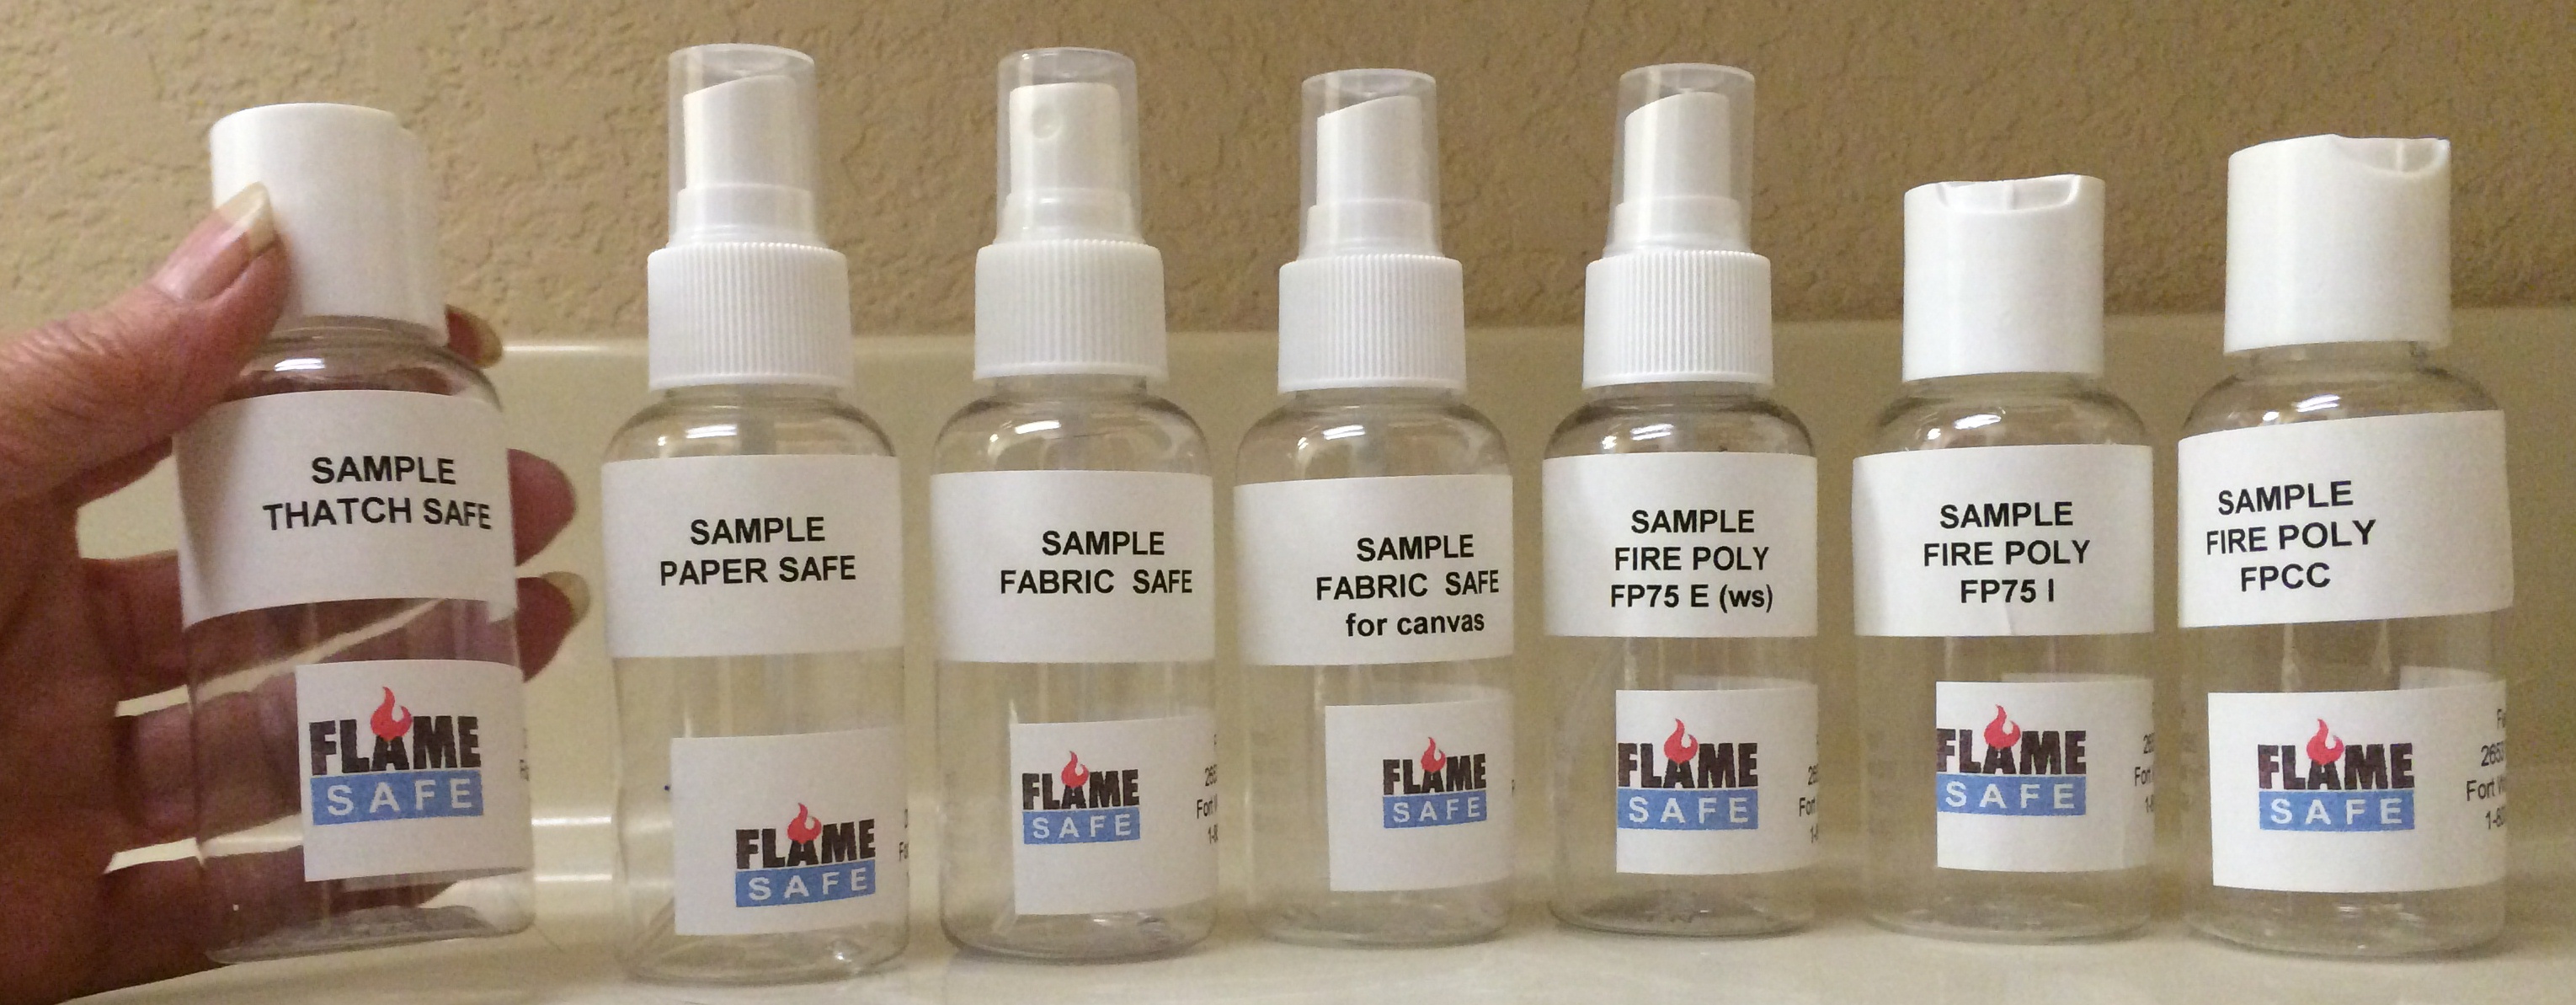 Free fire retardant sample